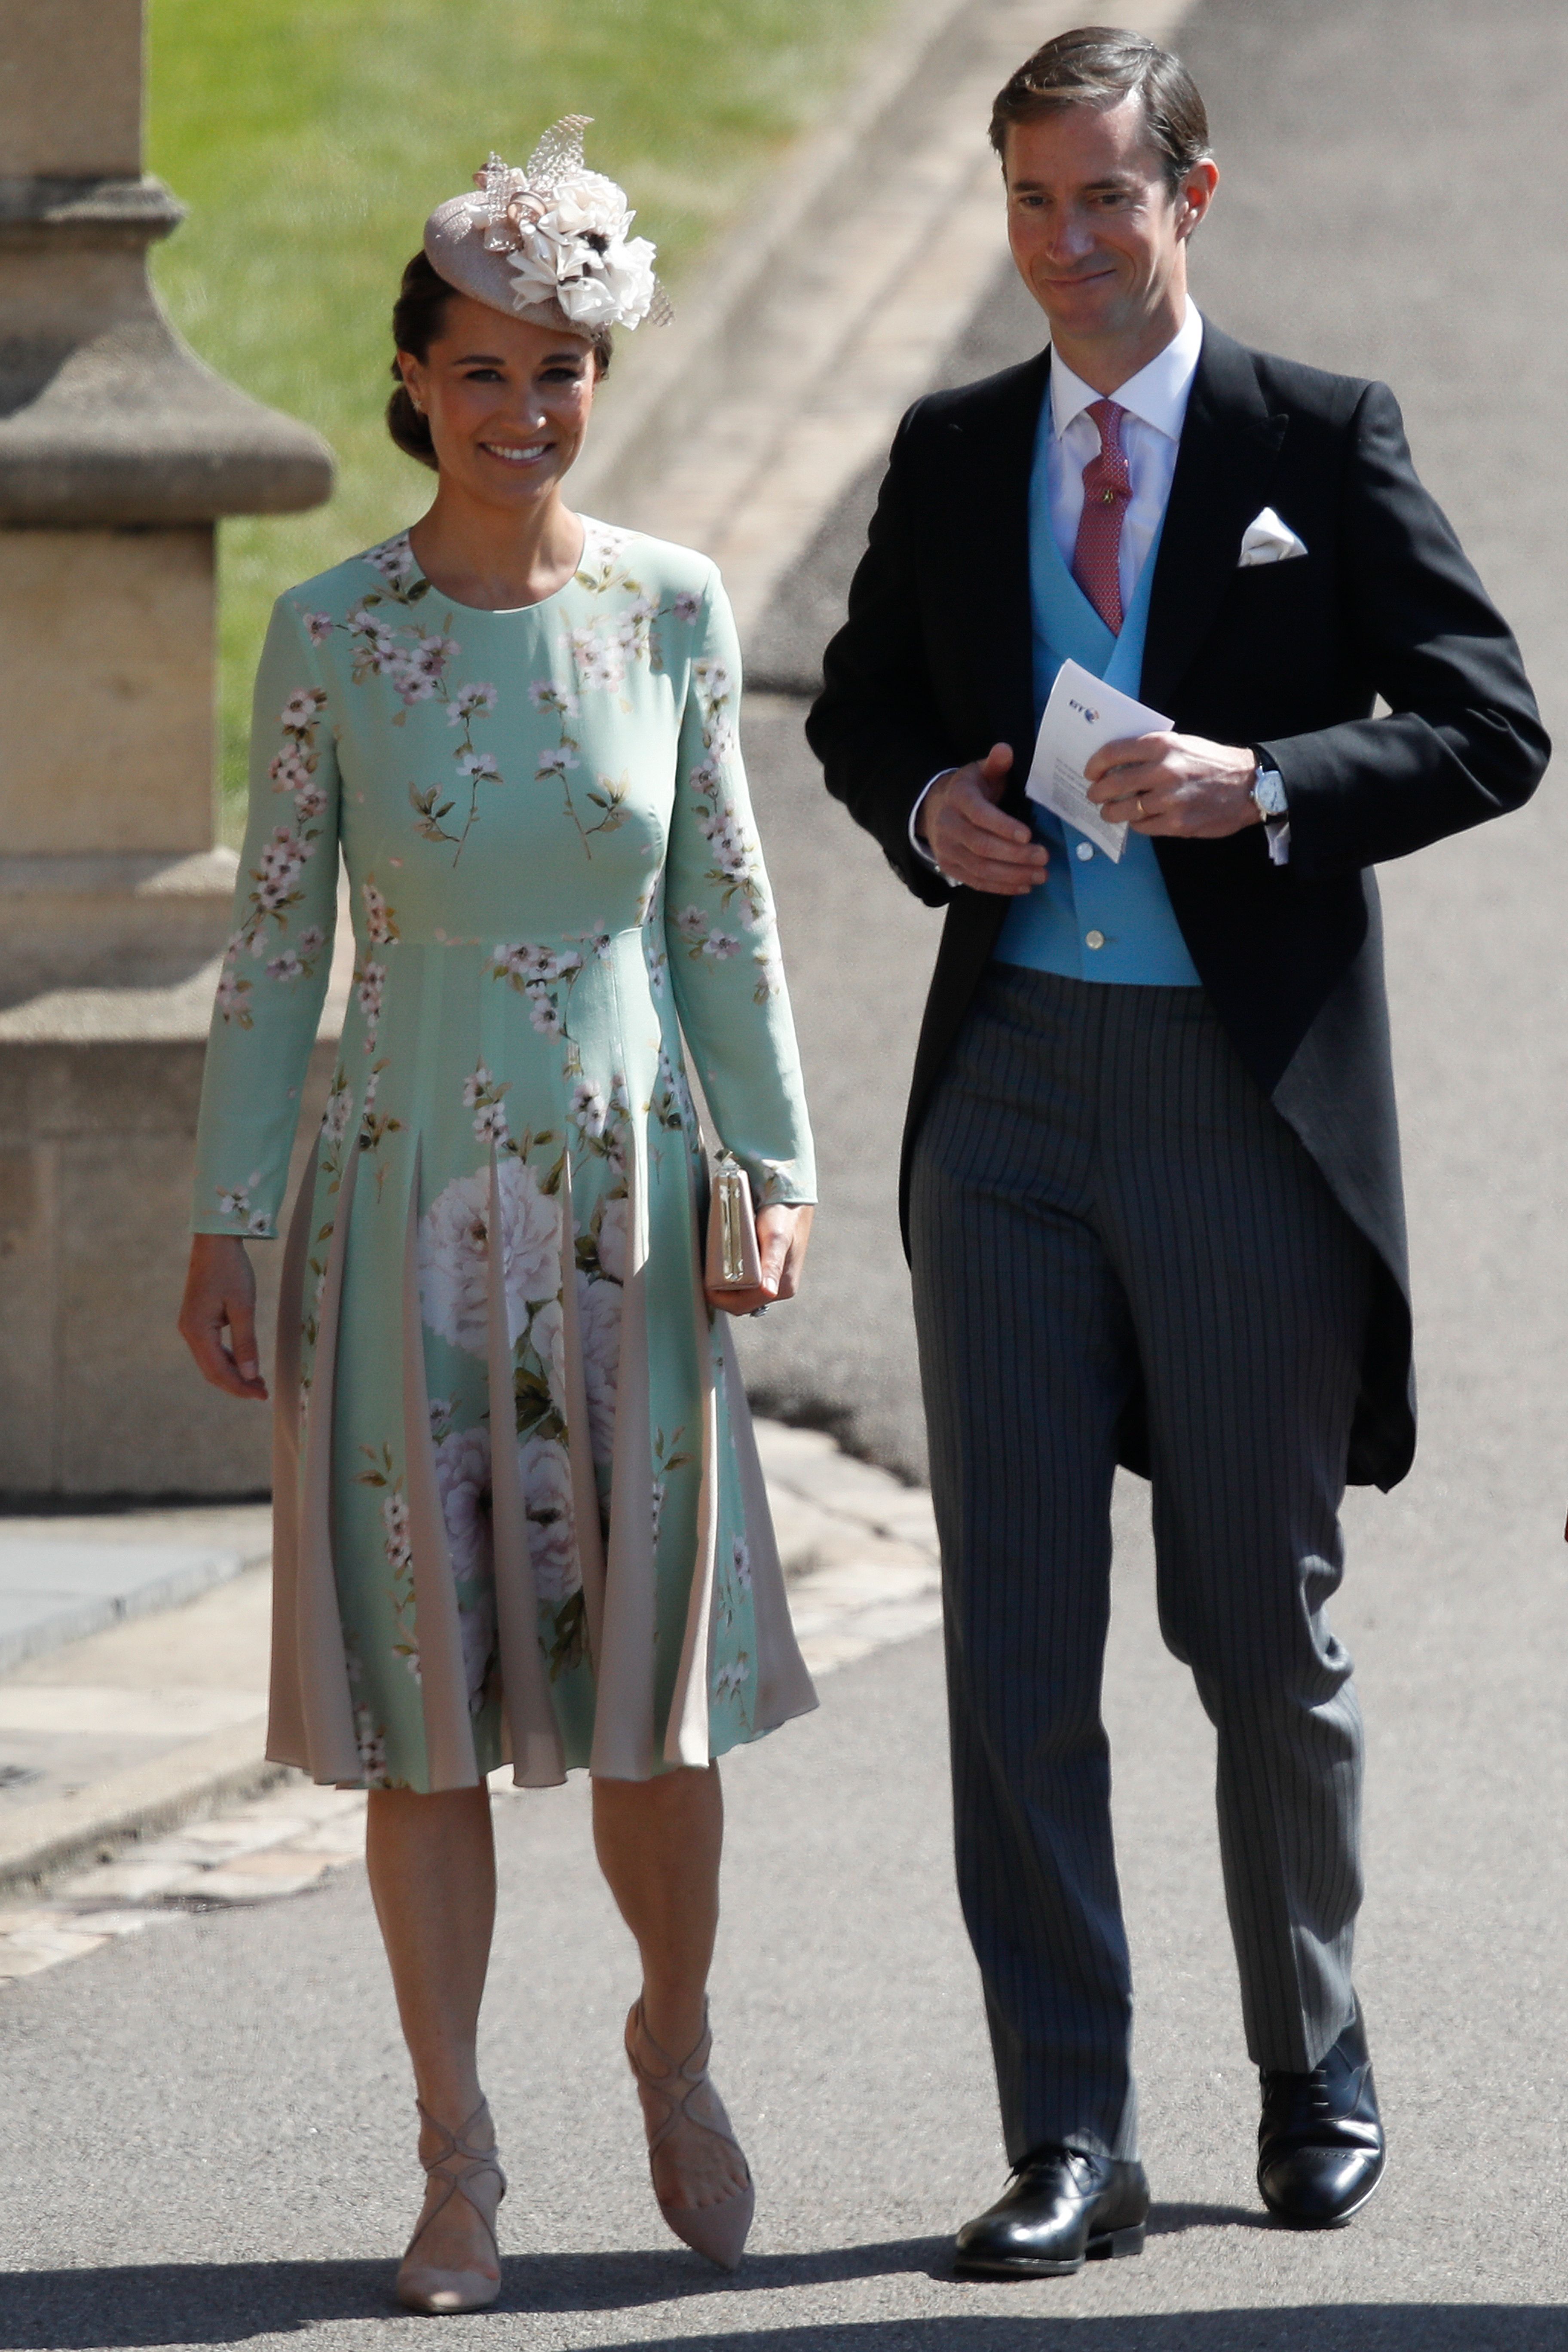 Royal Wedding 2018: Wildest Fascinators, Hats